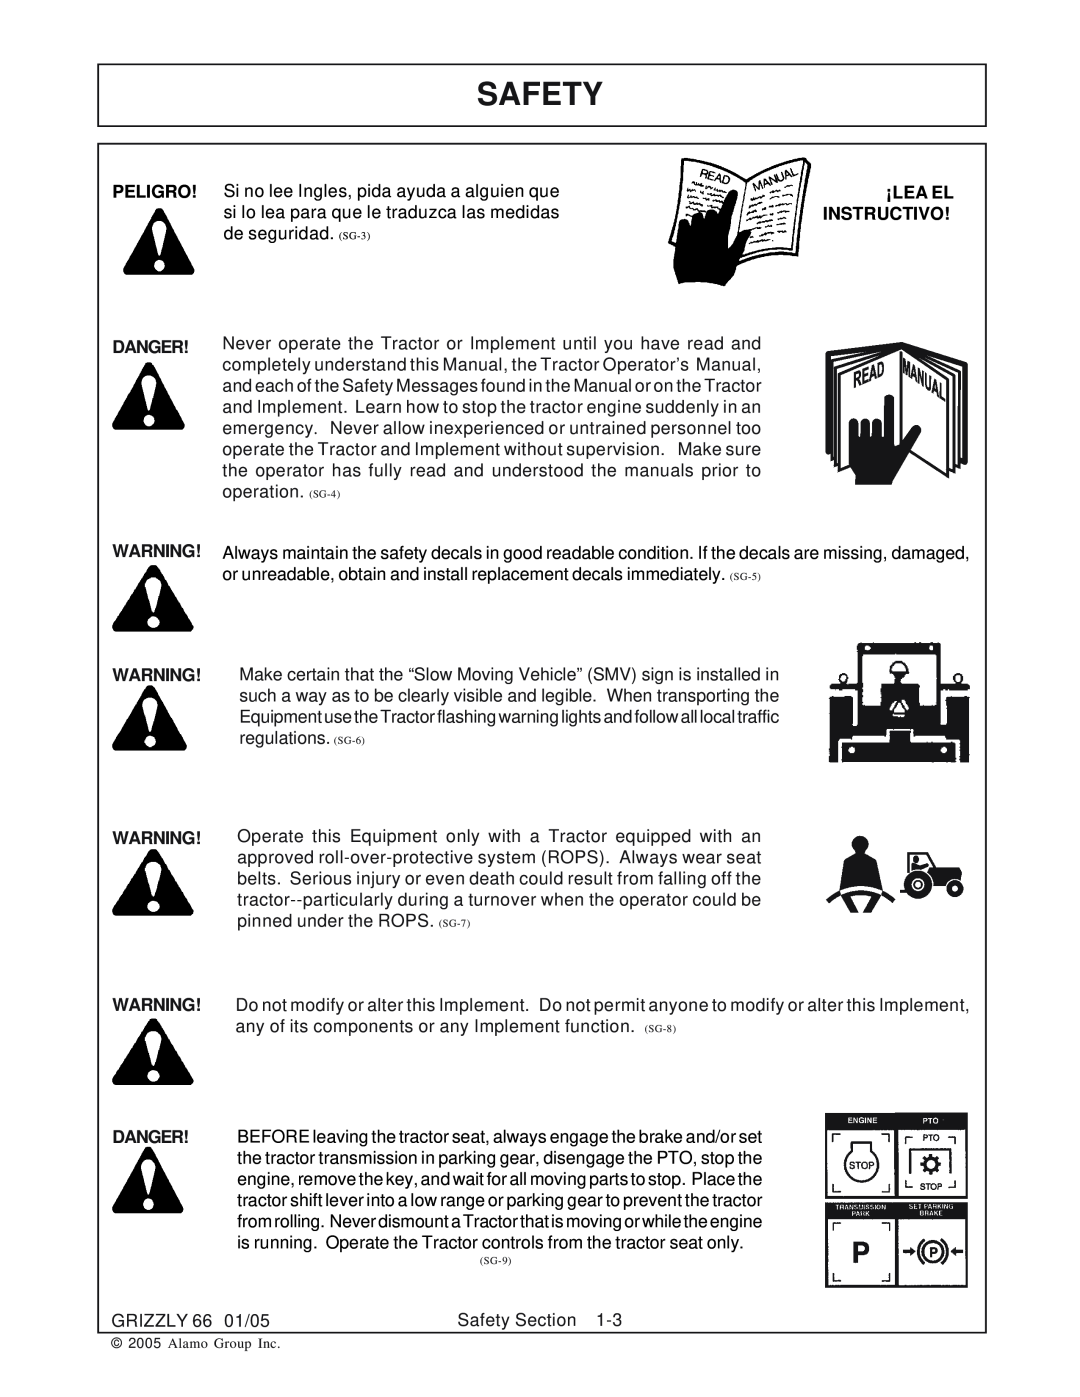 Alamo 66 manual Safety, Peligro Danger, ¡Lea El Instructivo, SG-9 